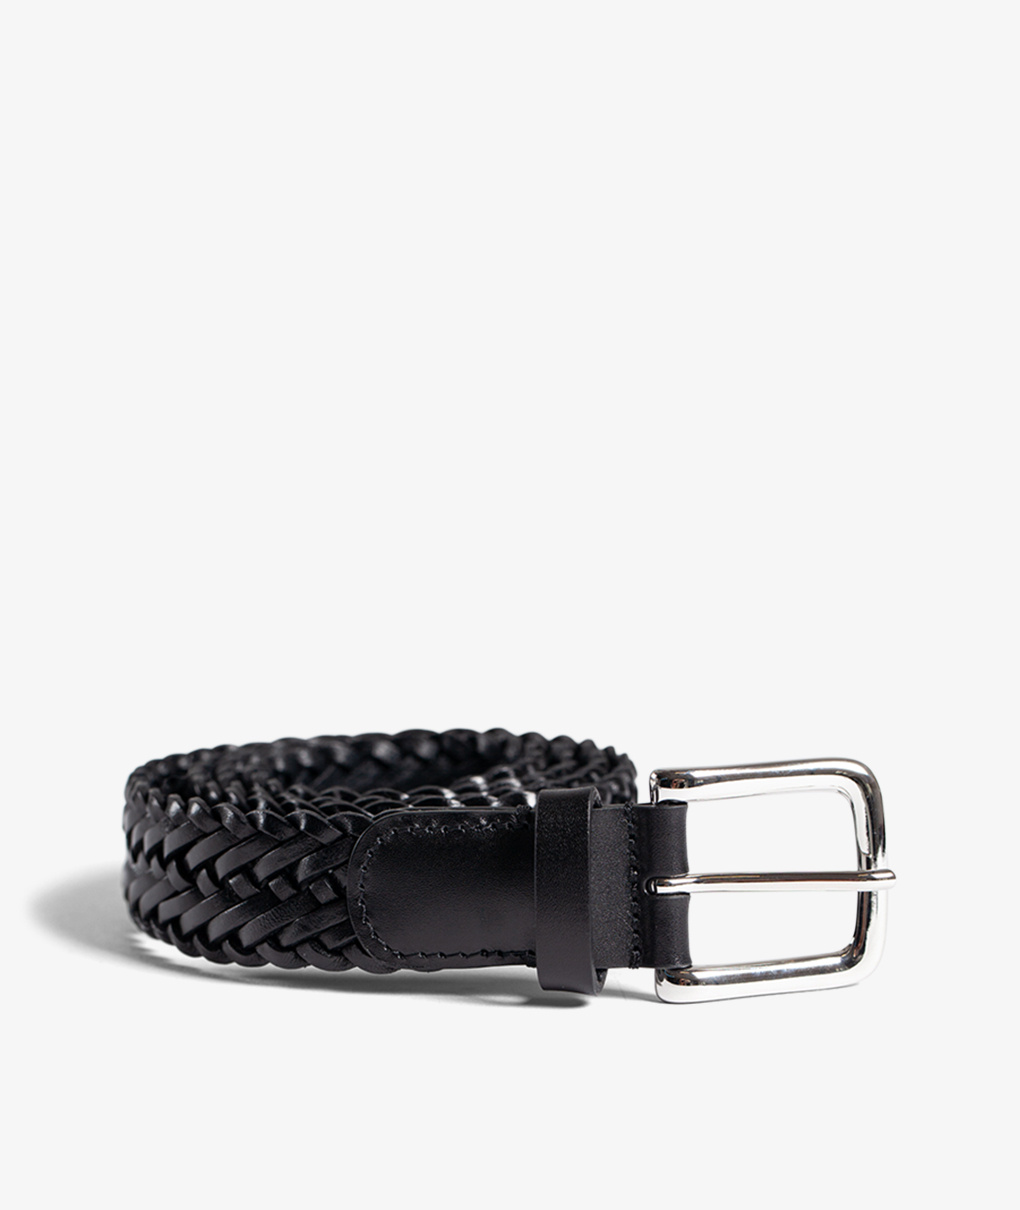 https://www.norsestore.com/shared/157/65/andersons-braided-leather-belt_u.jpg